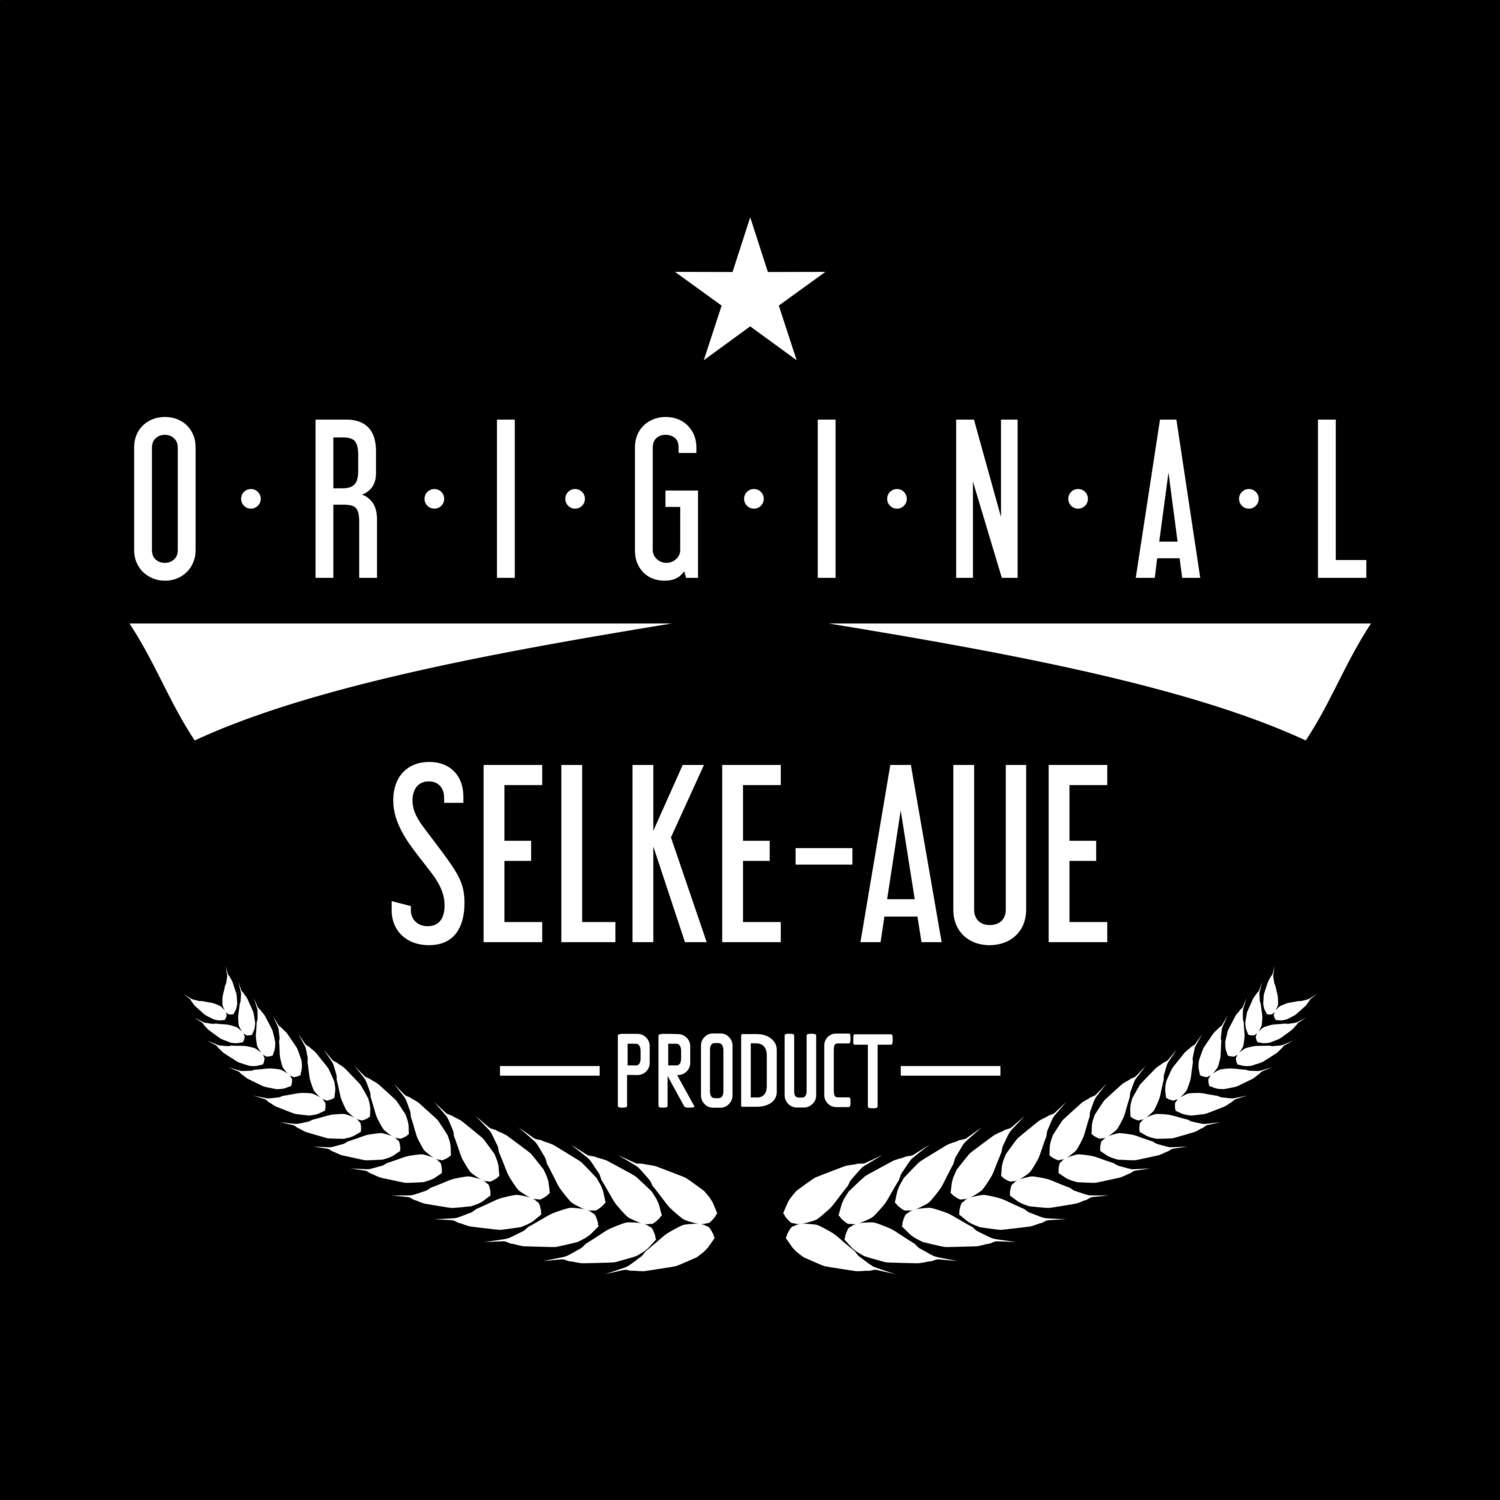 Selke-Aue T-Shirt »Original Product«